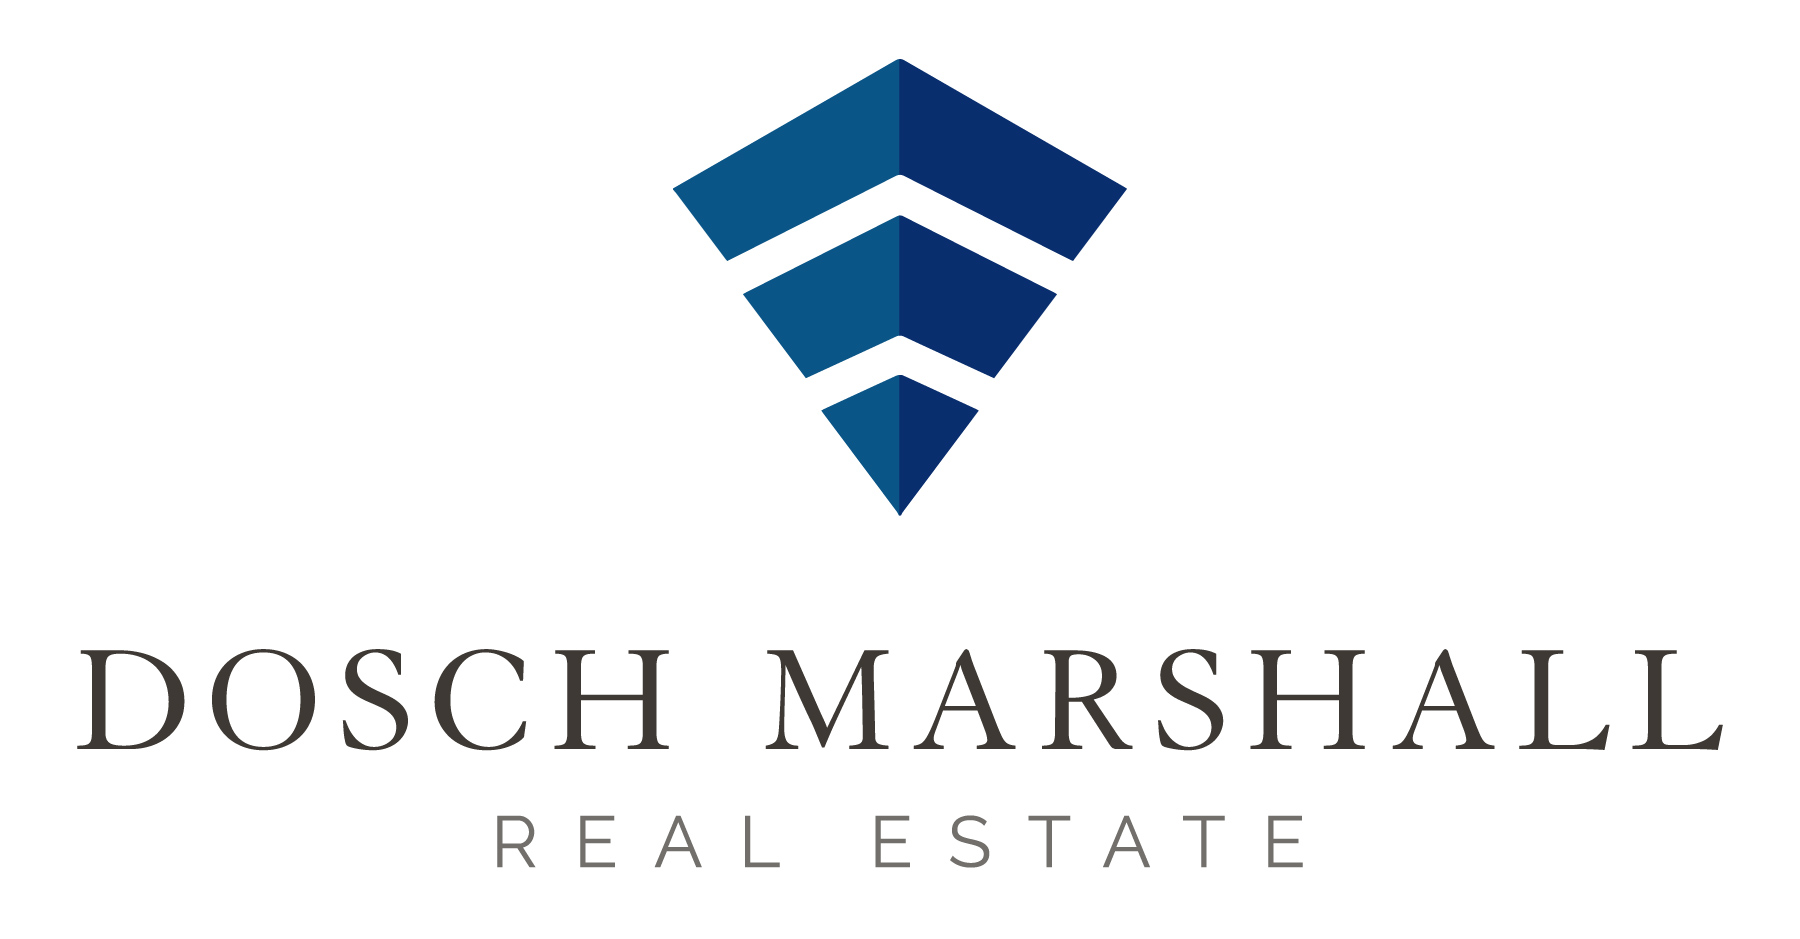 Dosch Marshall Real Estate logo